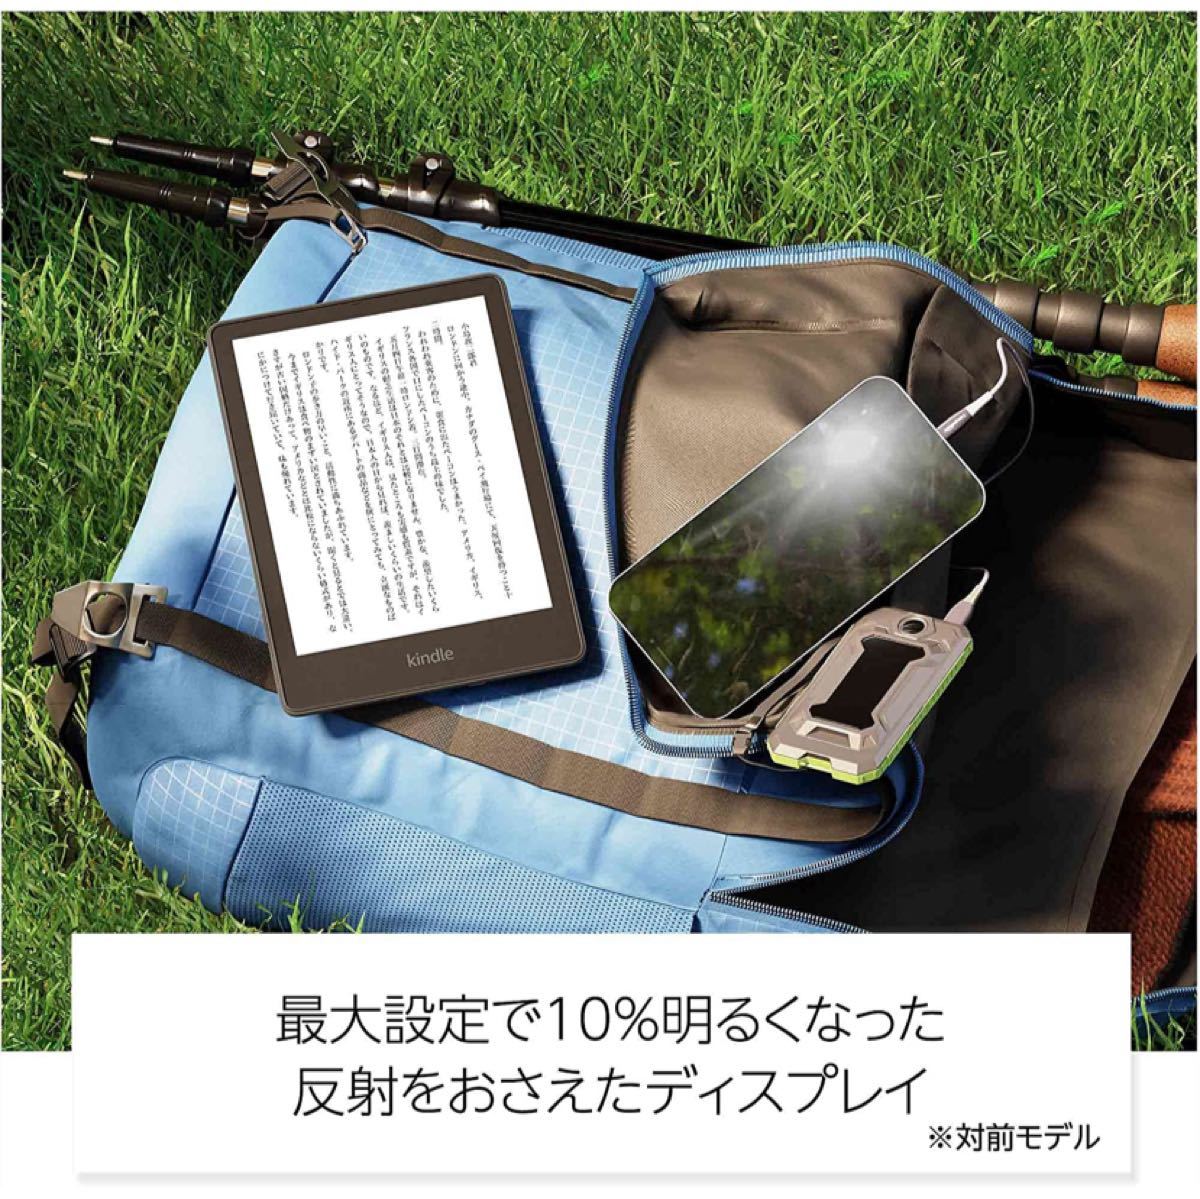 【NEWモデル】Kindle Paperwhite (8GB) 6.8インチディスプレイ 色調調節ライト搭載 広告なし アマゾン